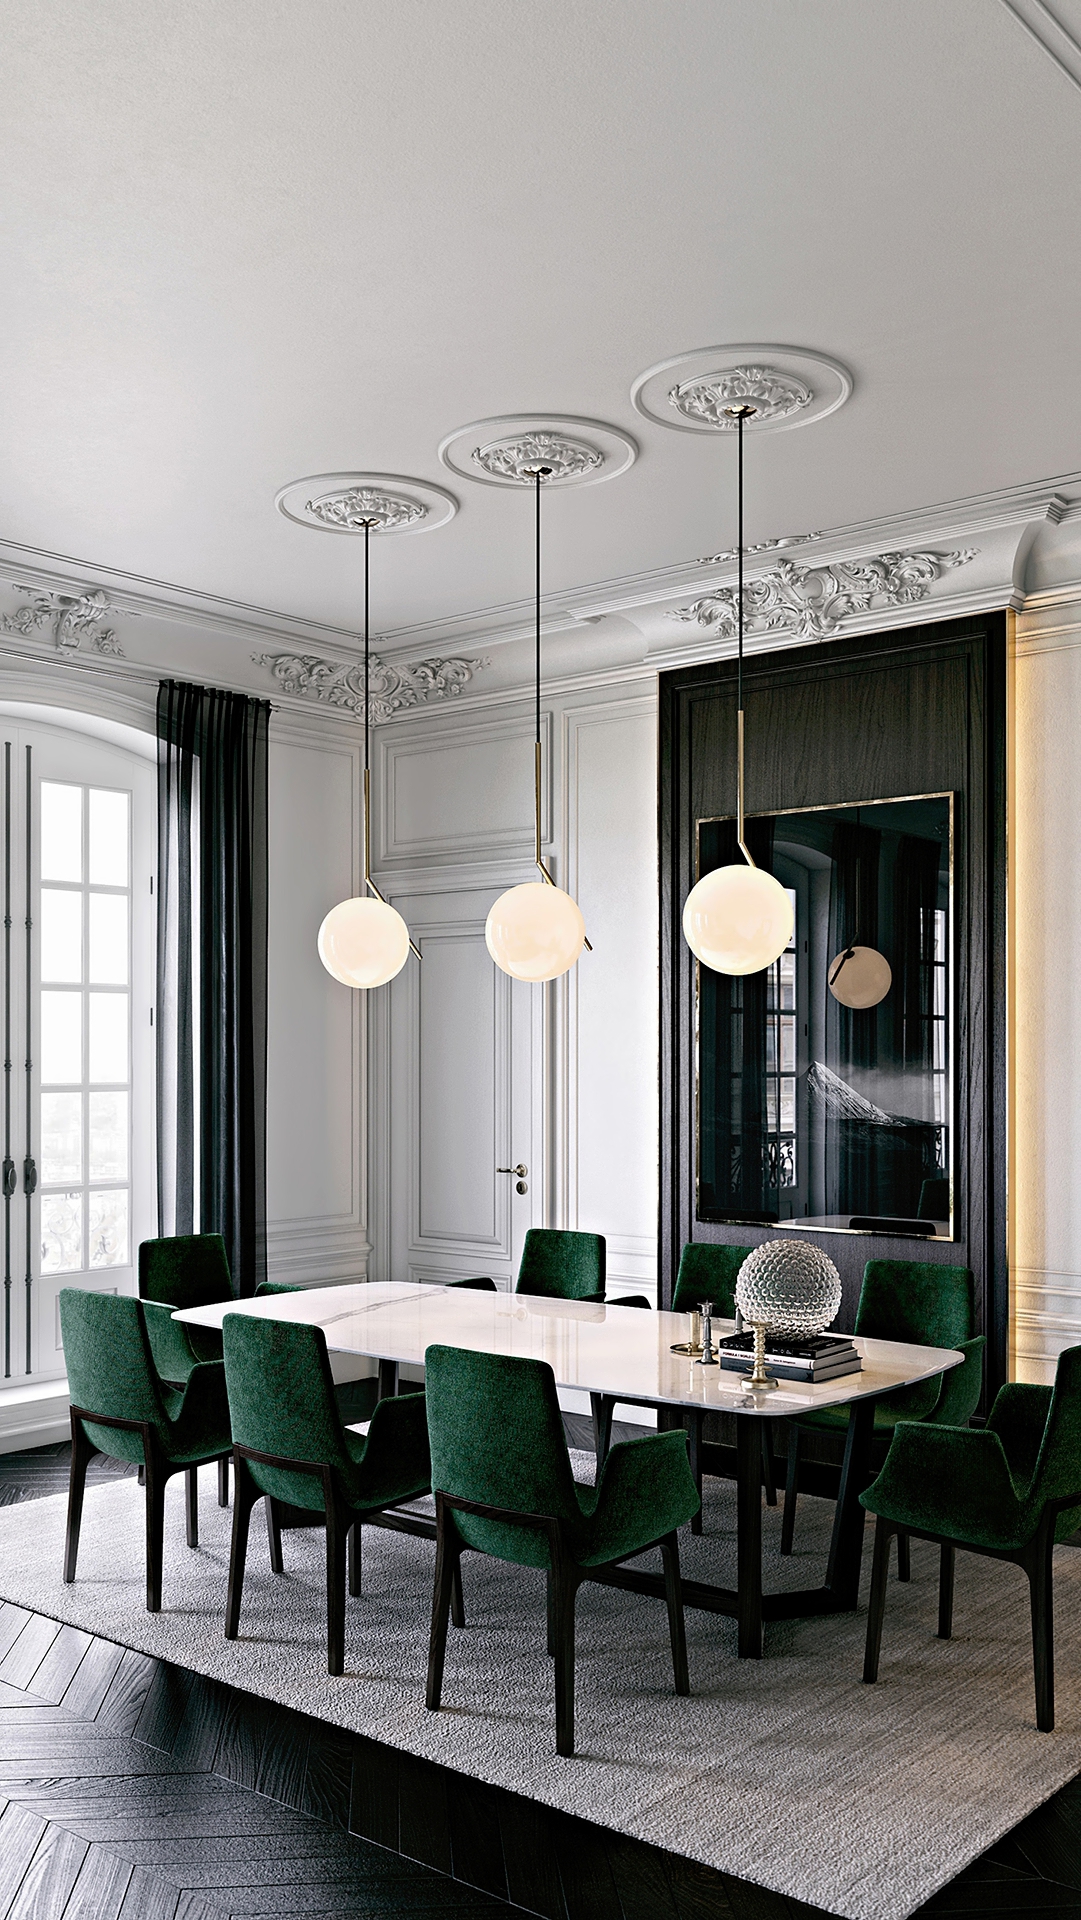 French living Classic contemporary Paris Interior eclecticism